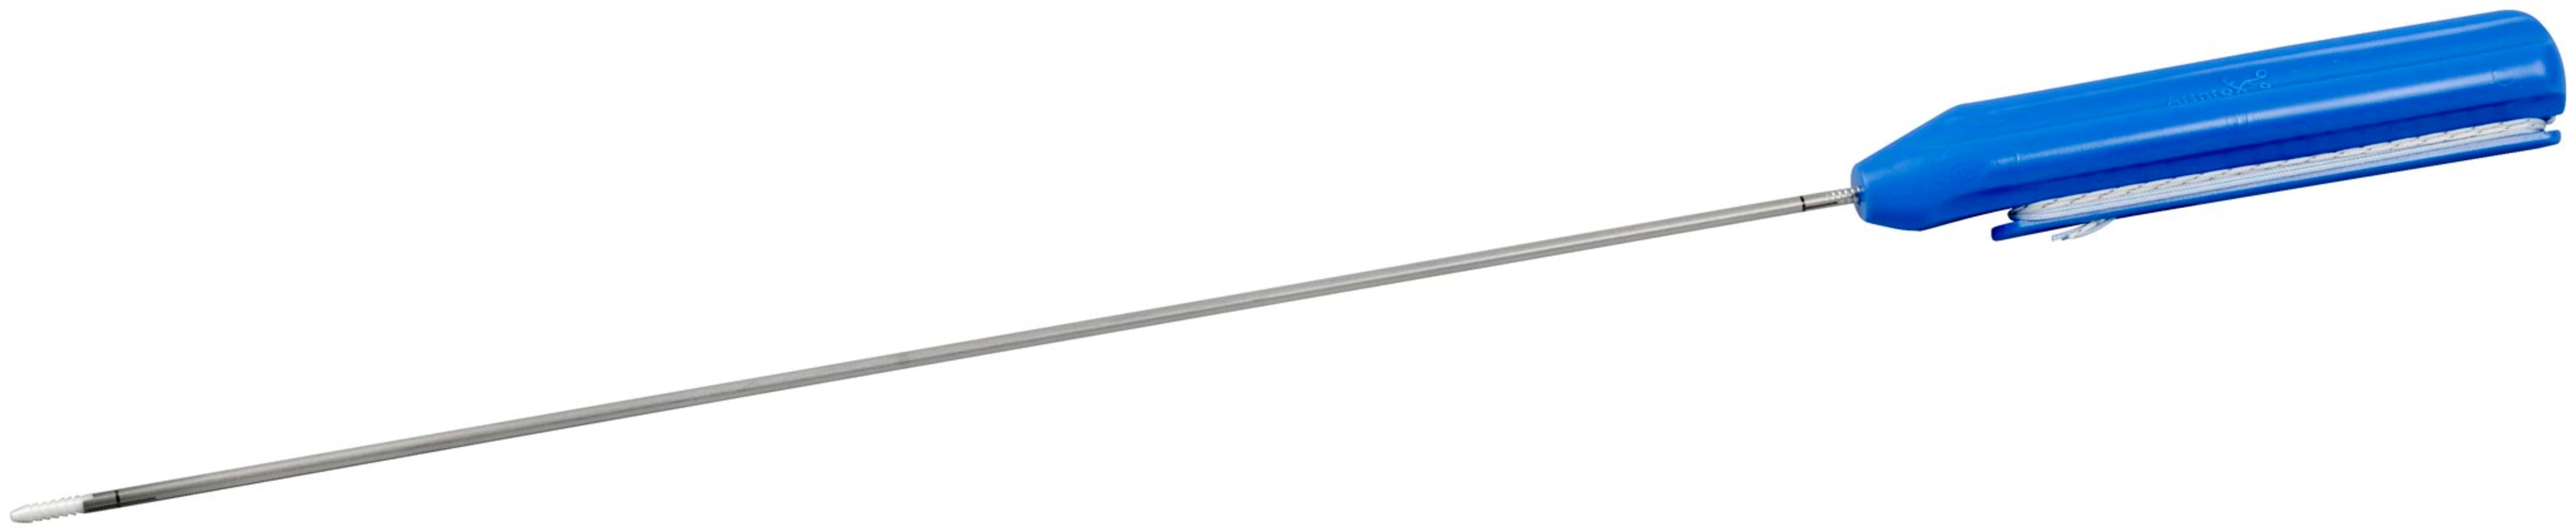 BioComposite SutureTak Suture Anchor, 2.4 mm x 12 mm w/two #2 FiberWire